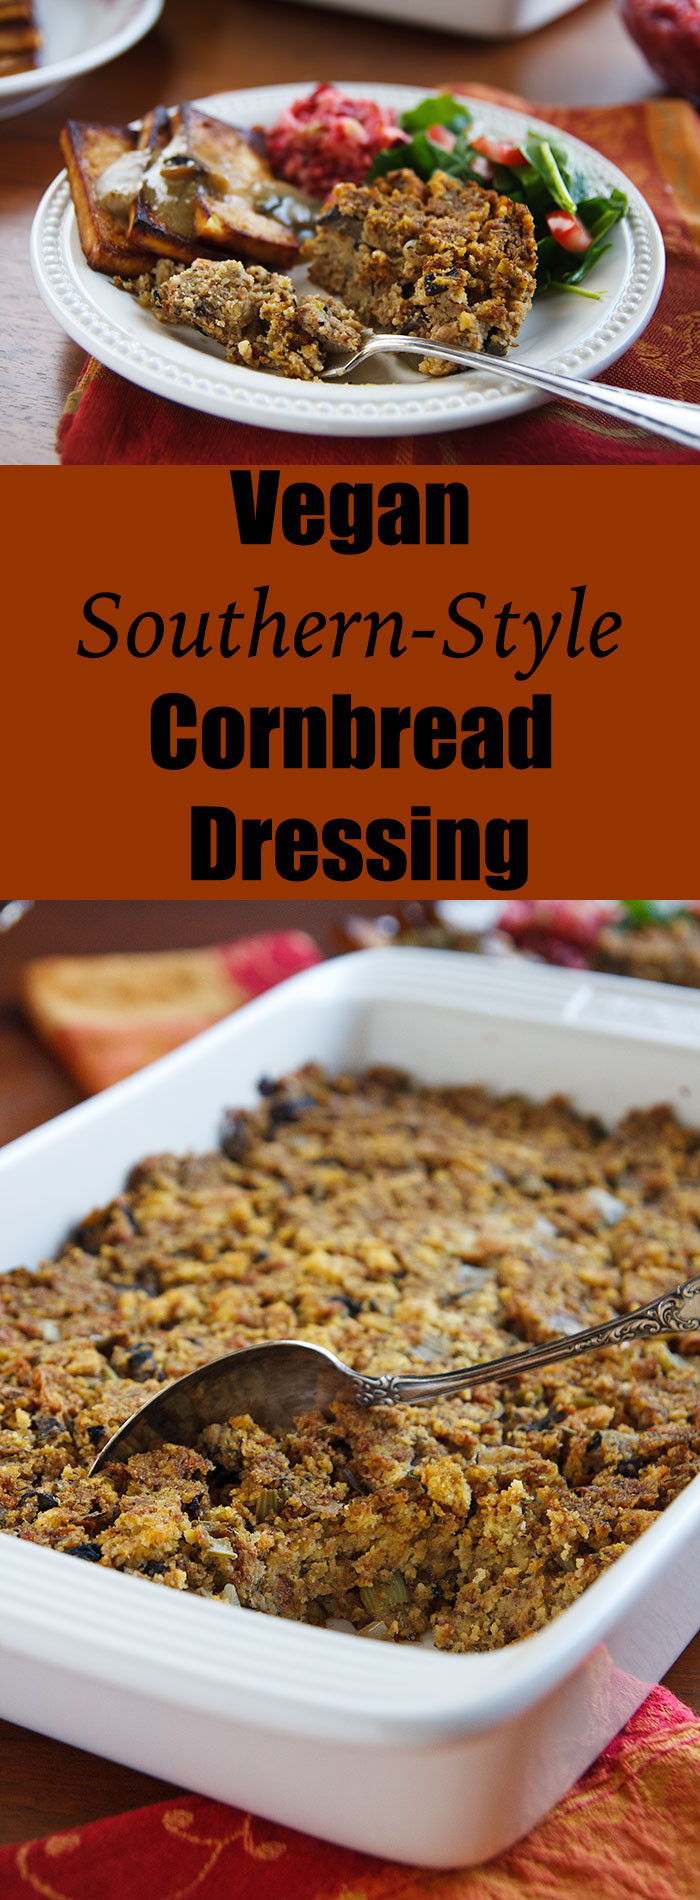 Southern Vegan Recipes
 Vegan Southern Style Cornbread Dressing